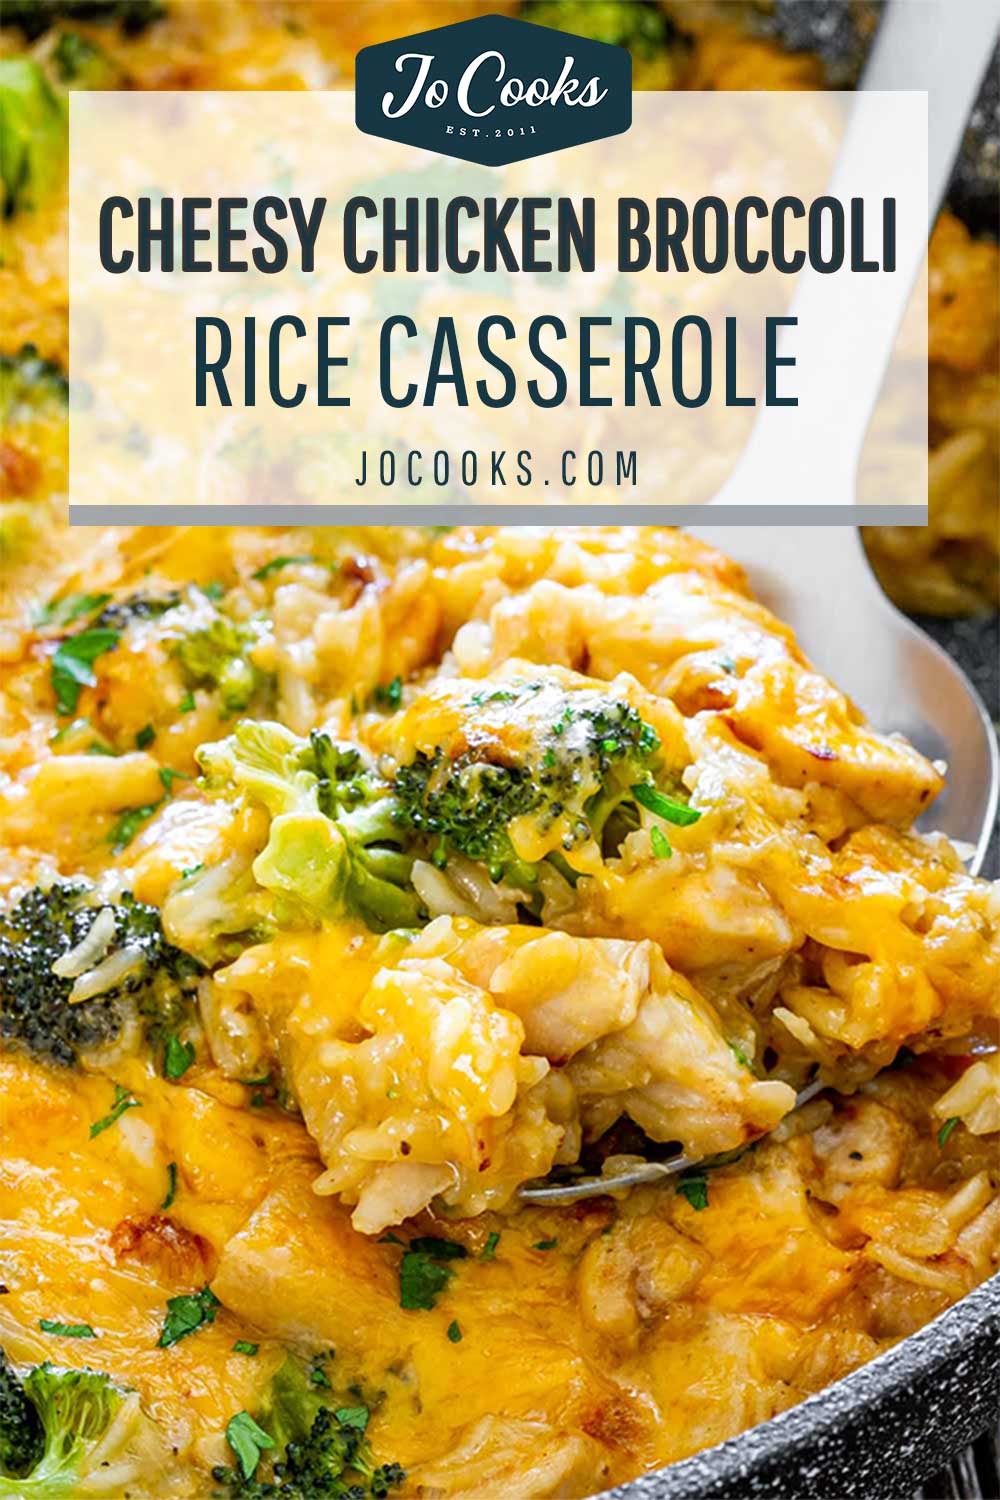 https://www.jocooks.com/wp-content/uploads/2018/12/chicken-broccoli-rice-casserole.jpg